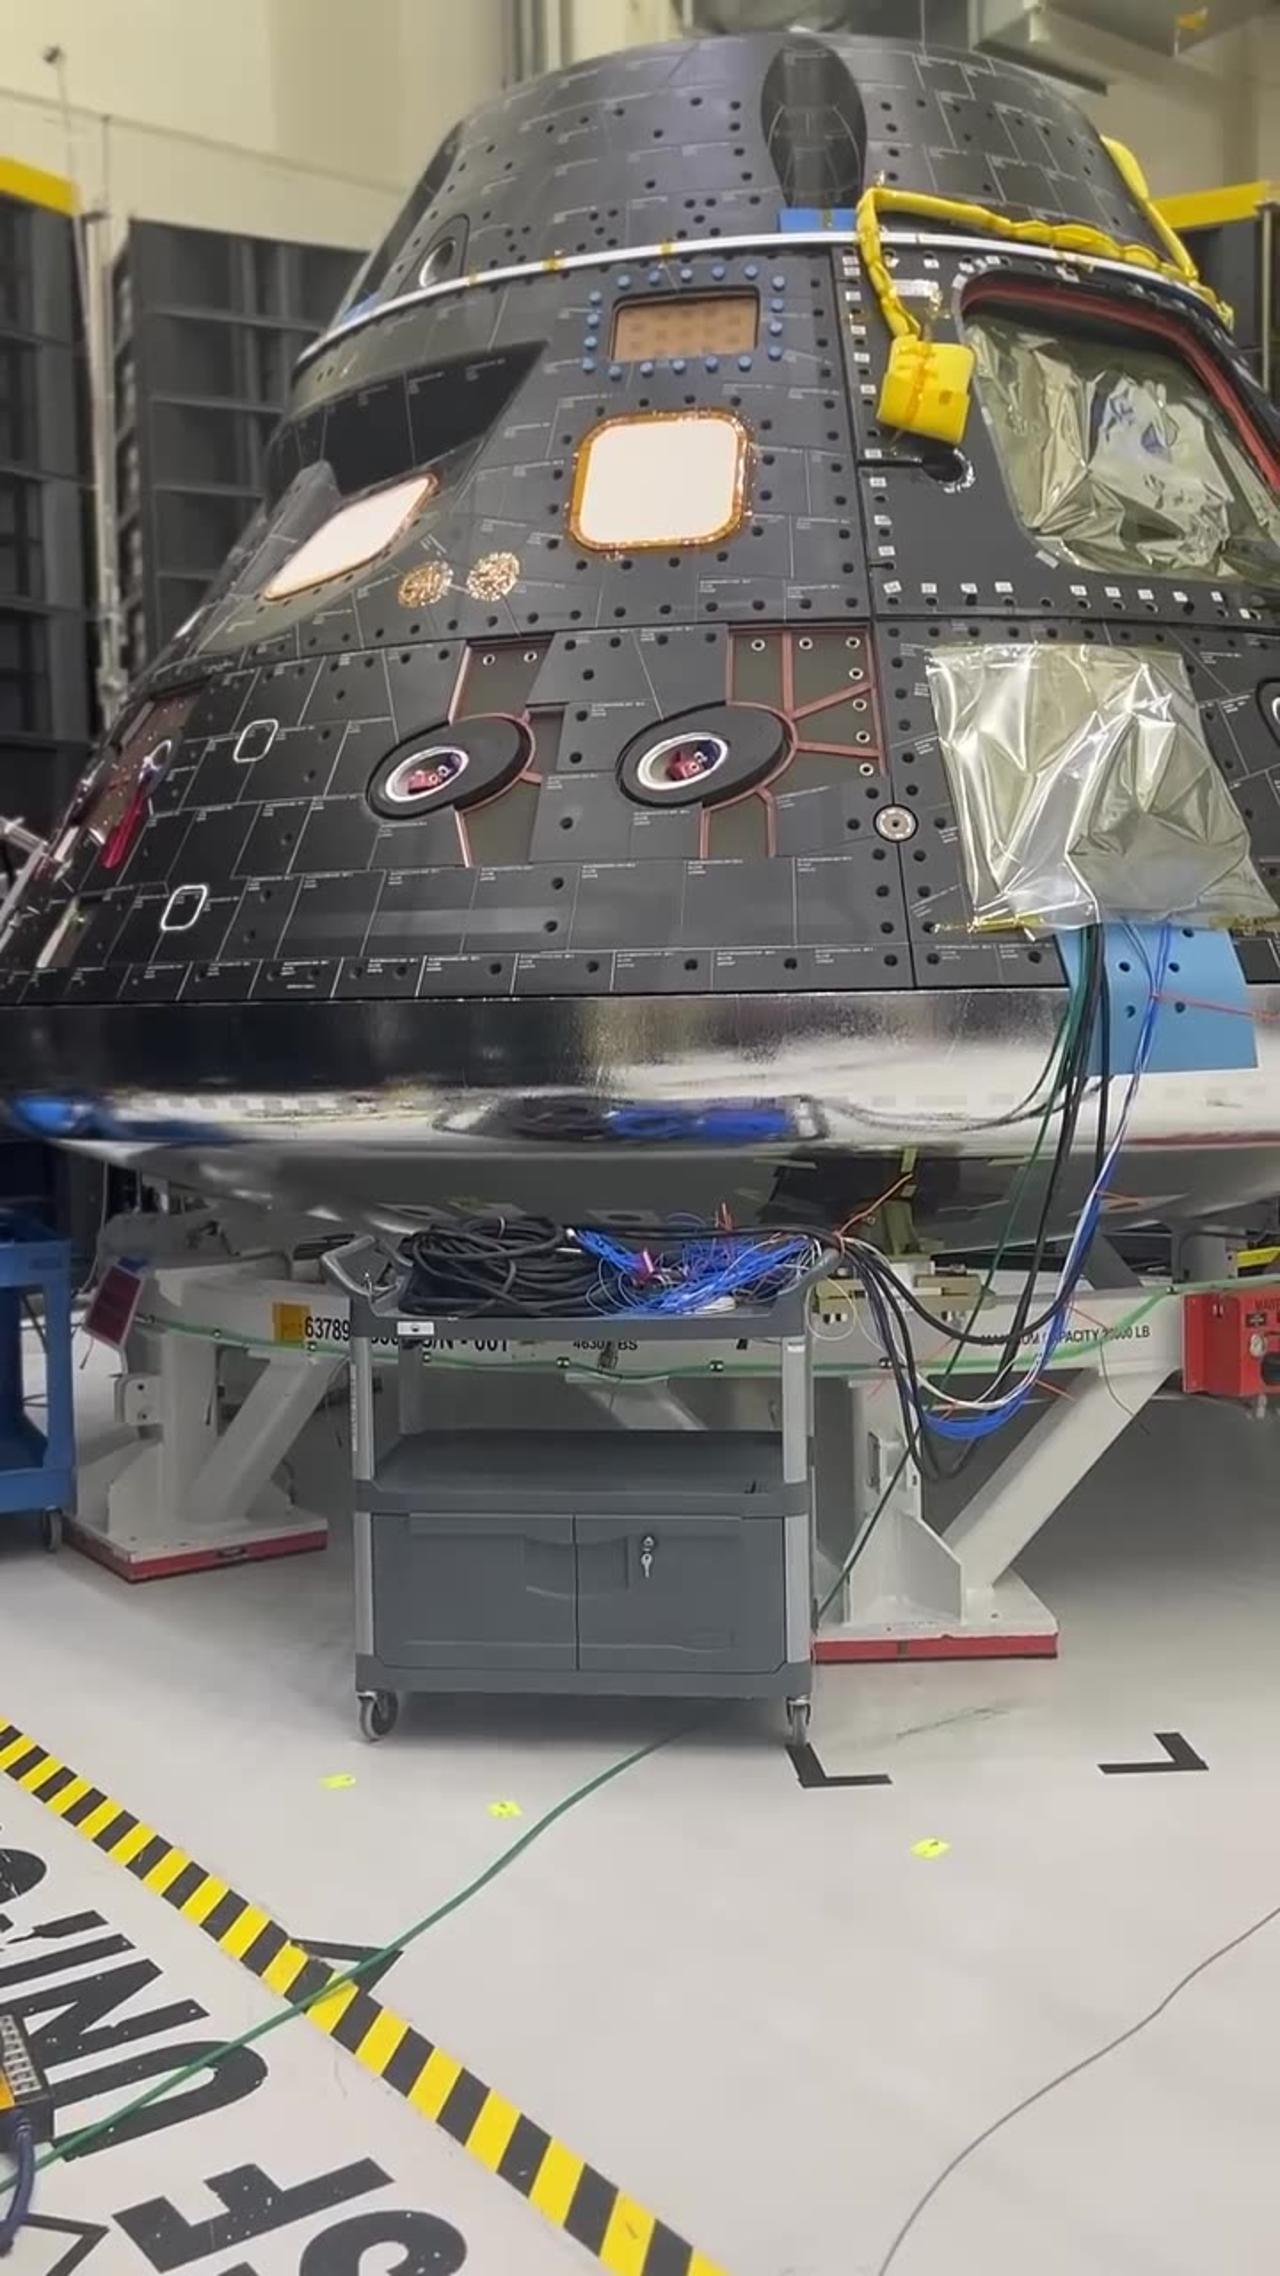 Artemis II Astronautsâ First Look at Their Lunar Spacecraft